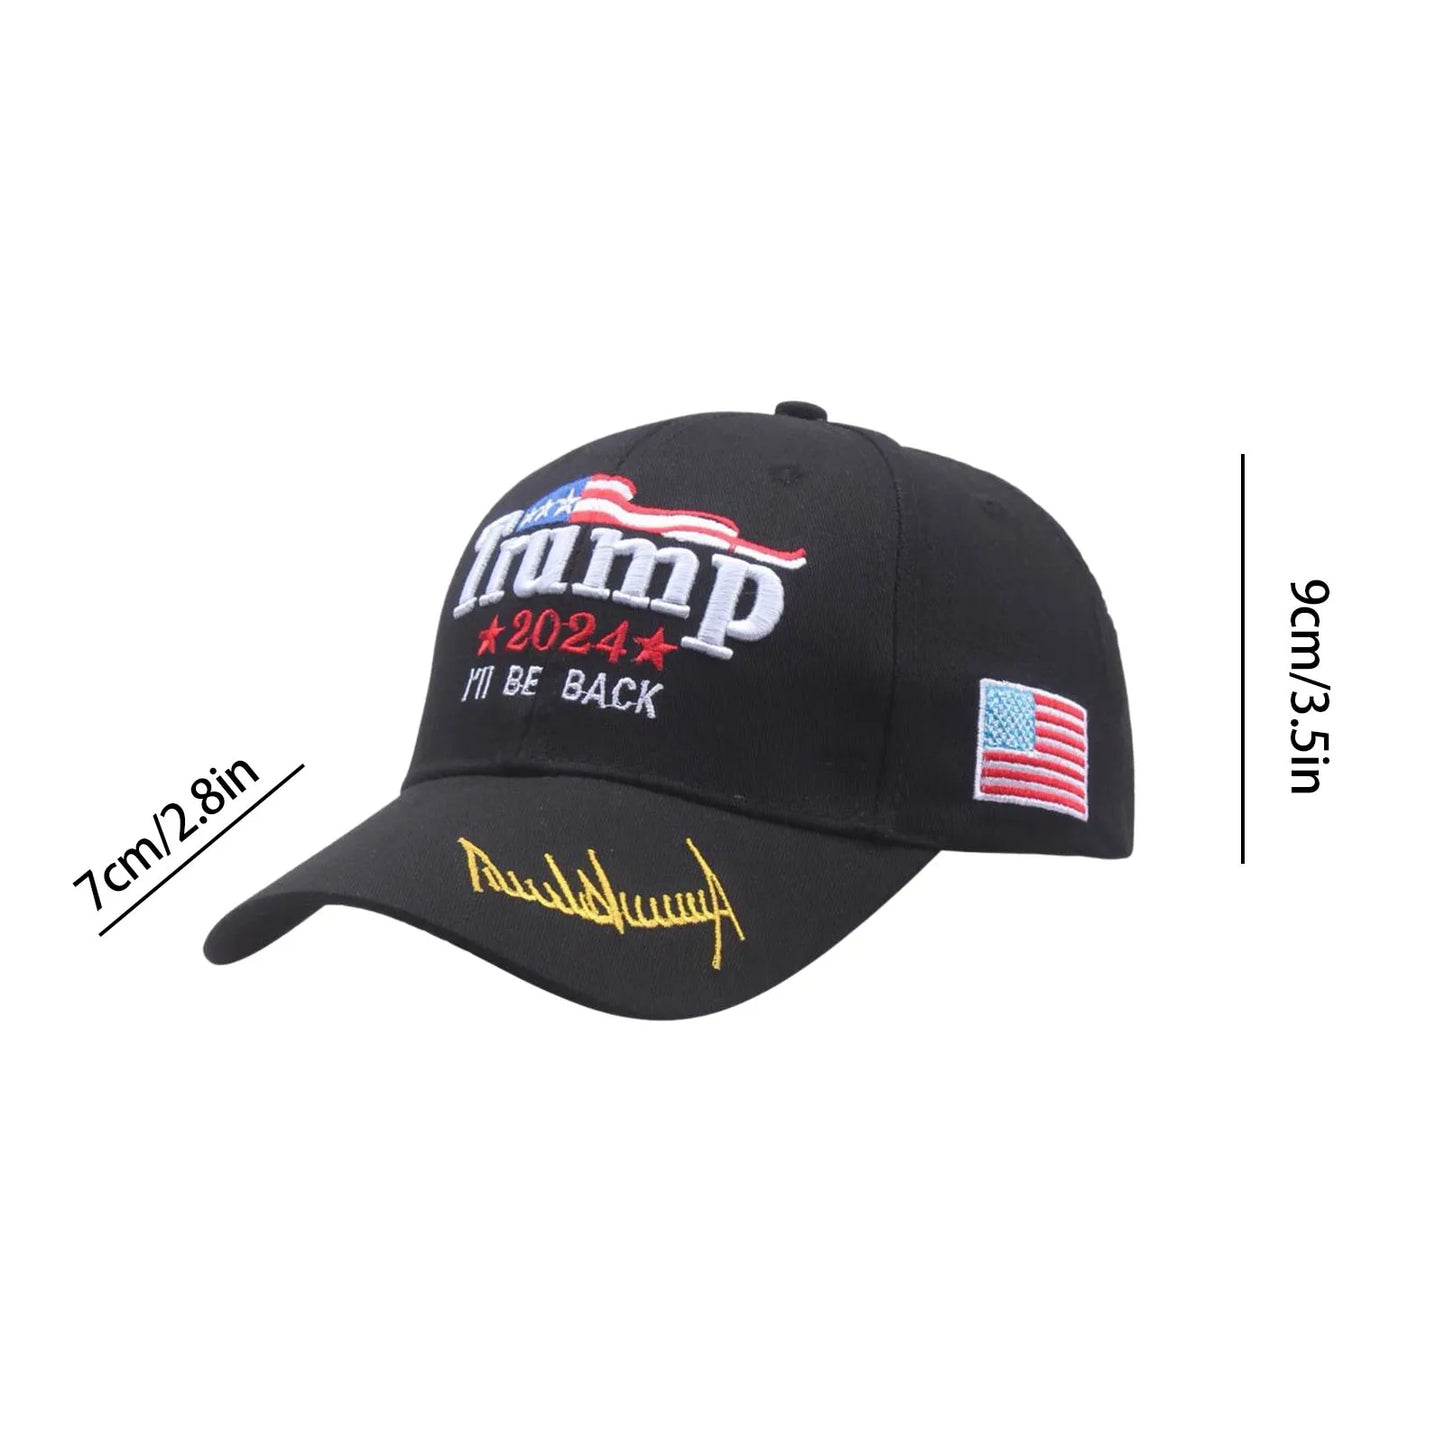 Stylish Donald Trump 2024 Cap USA Baseball Caps Keep America Great Rebound President Hat Embroidery Fashion Unisex Sunshade Hat